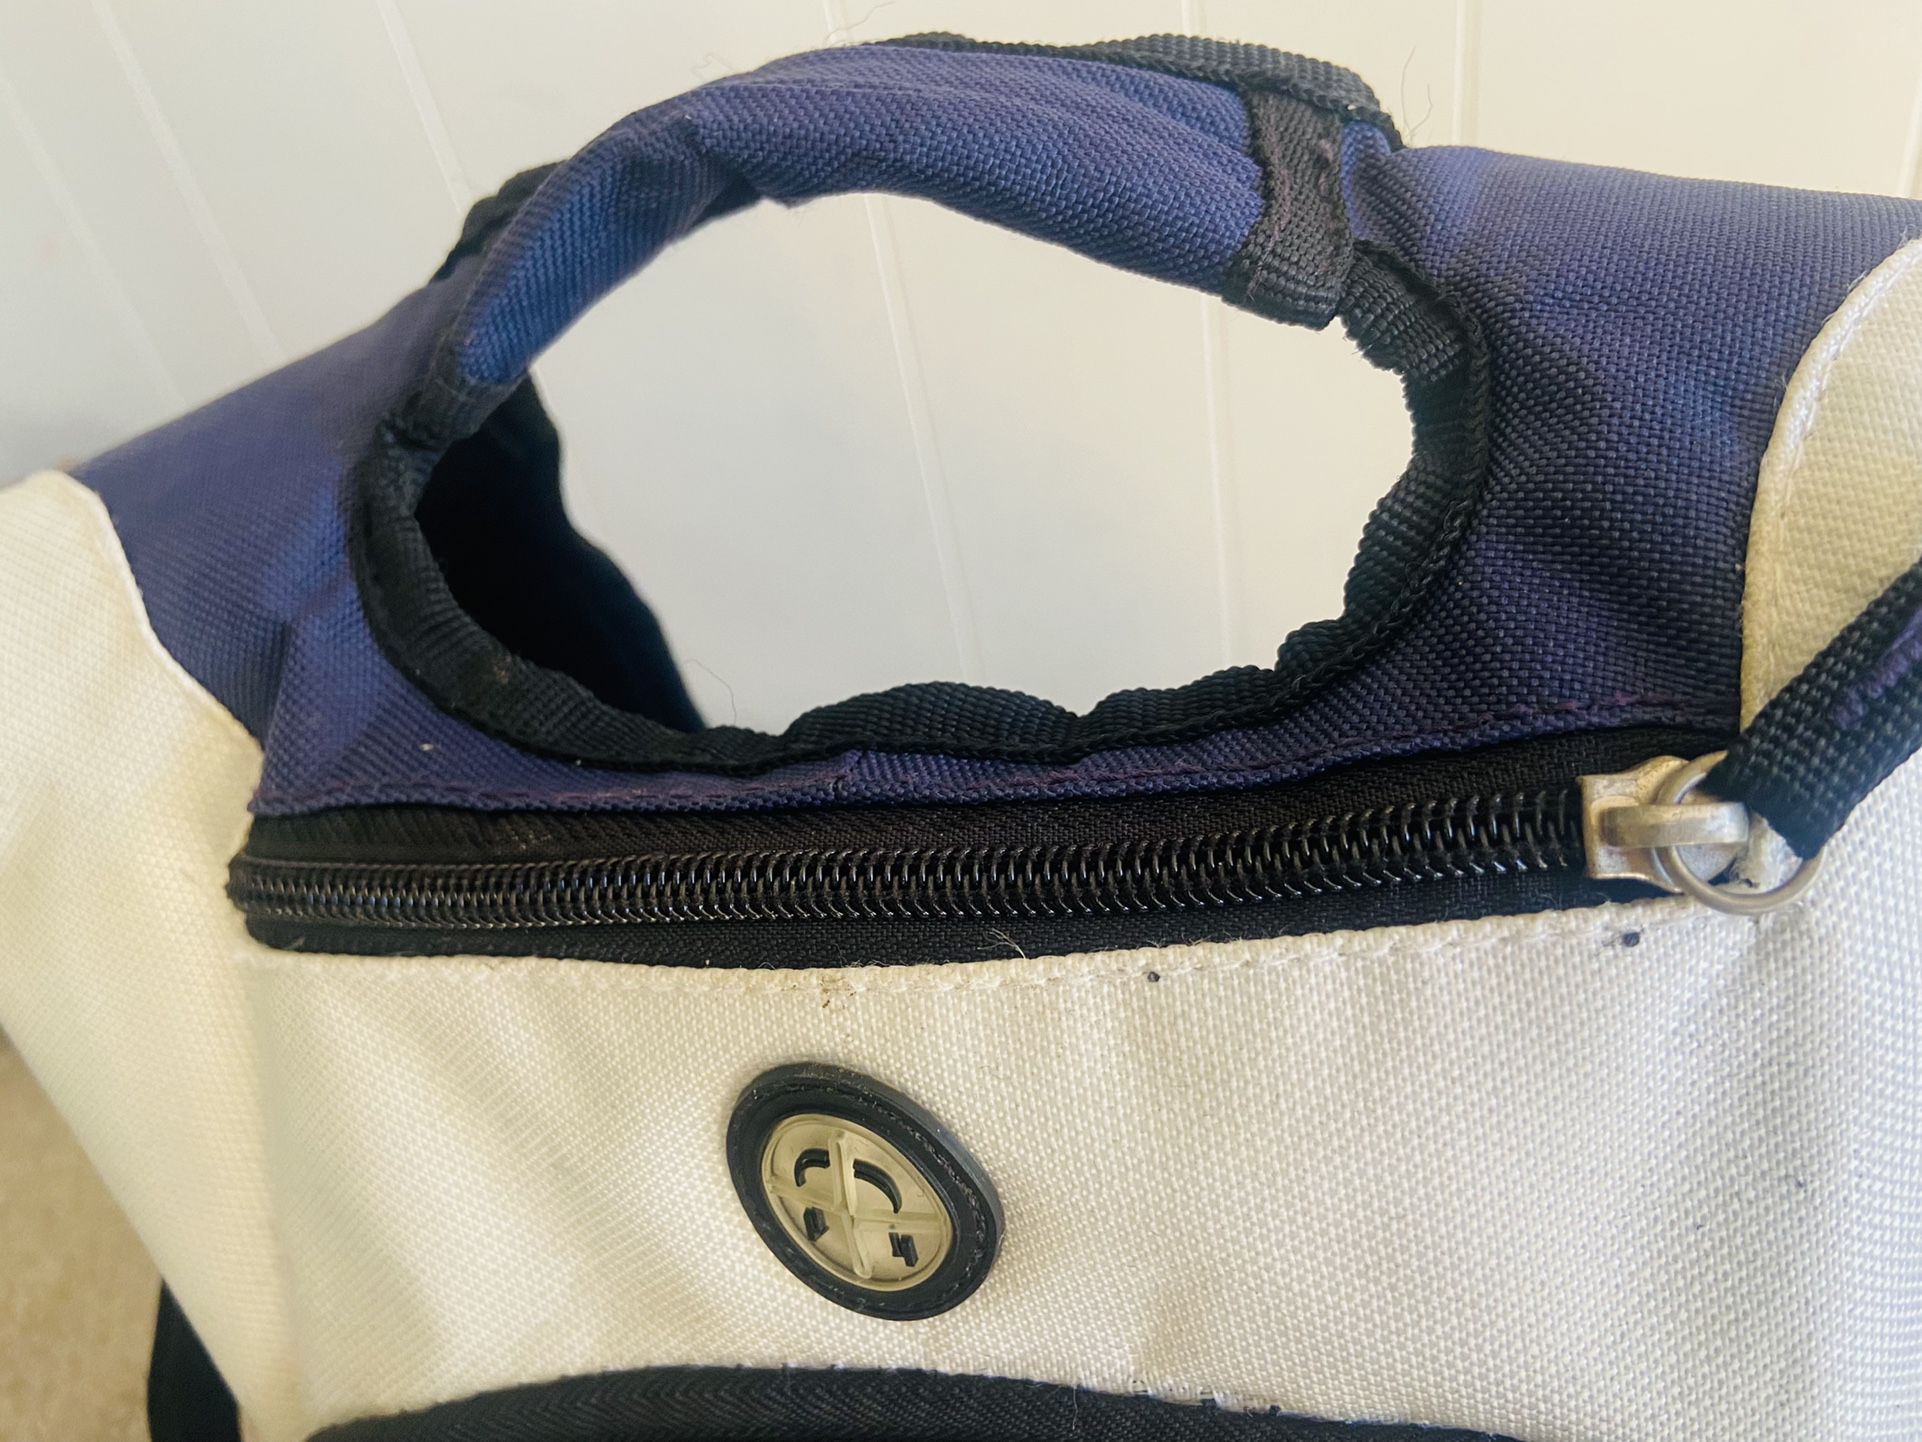 Demarini Baseball Backpack